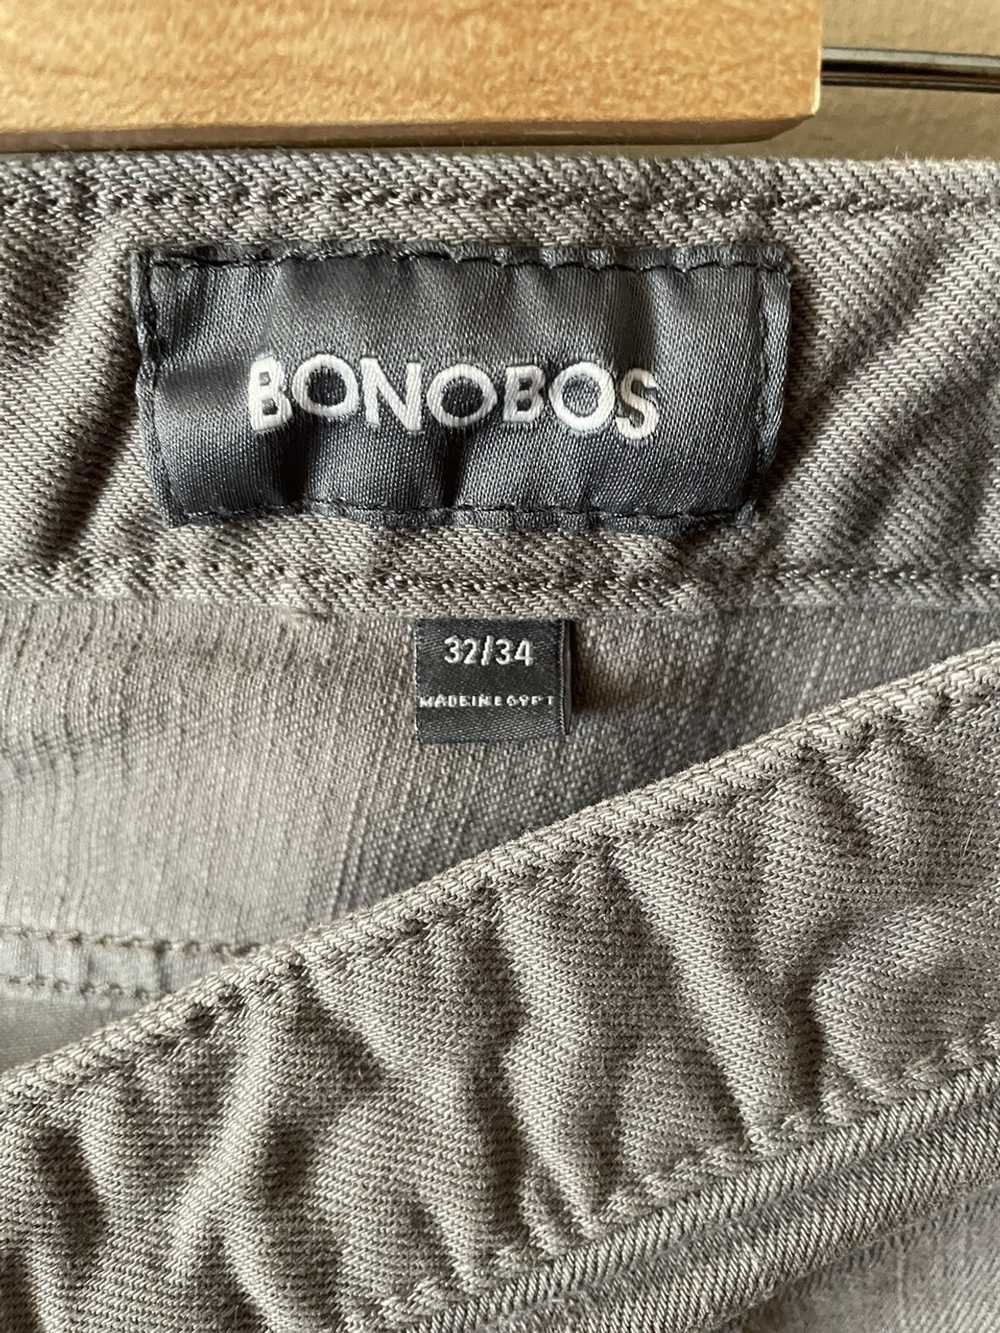 Bonobos Bonobos Slim Jeans - image 3